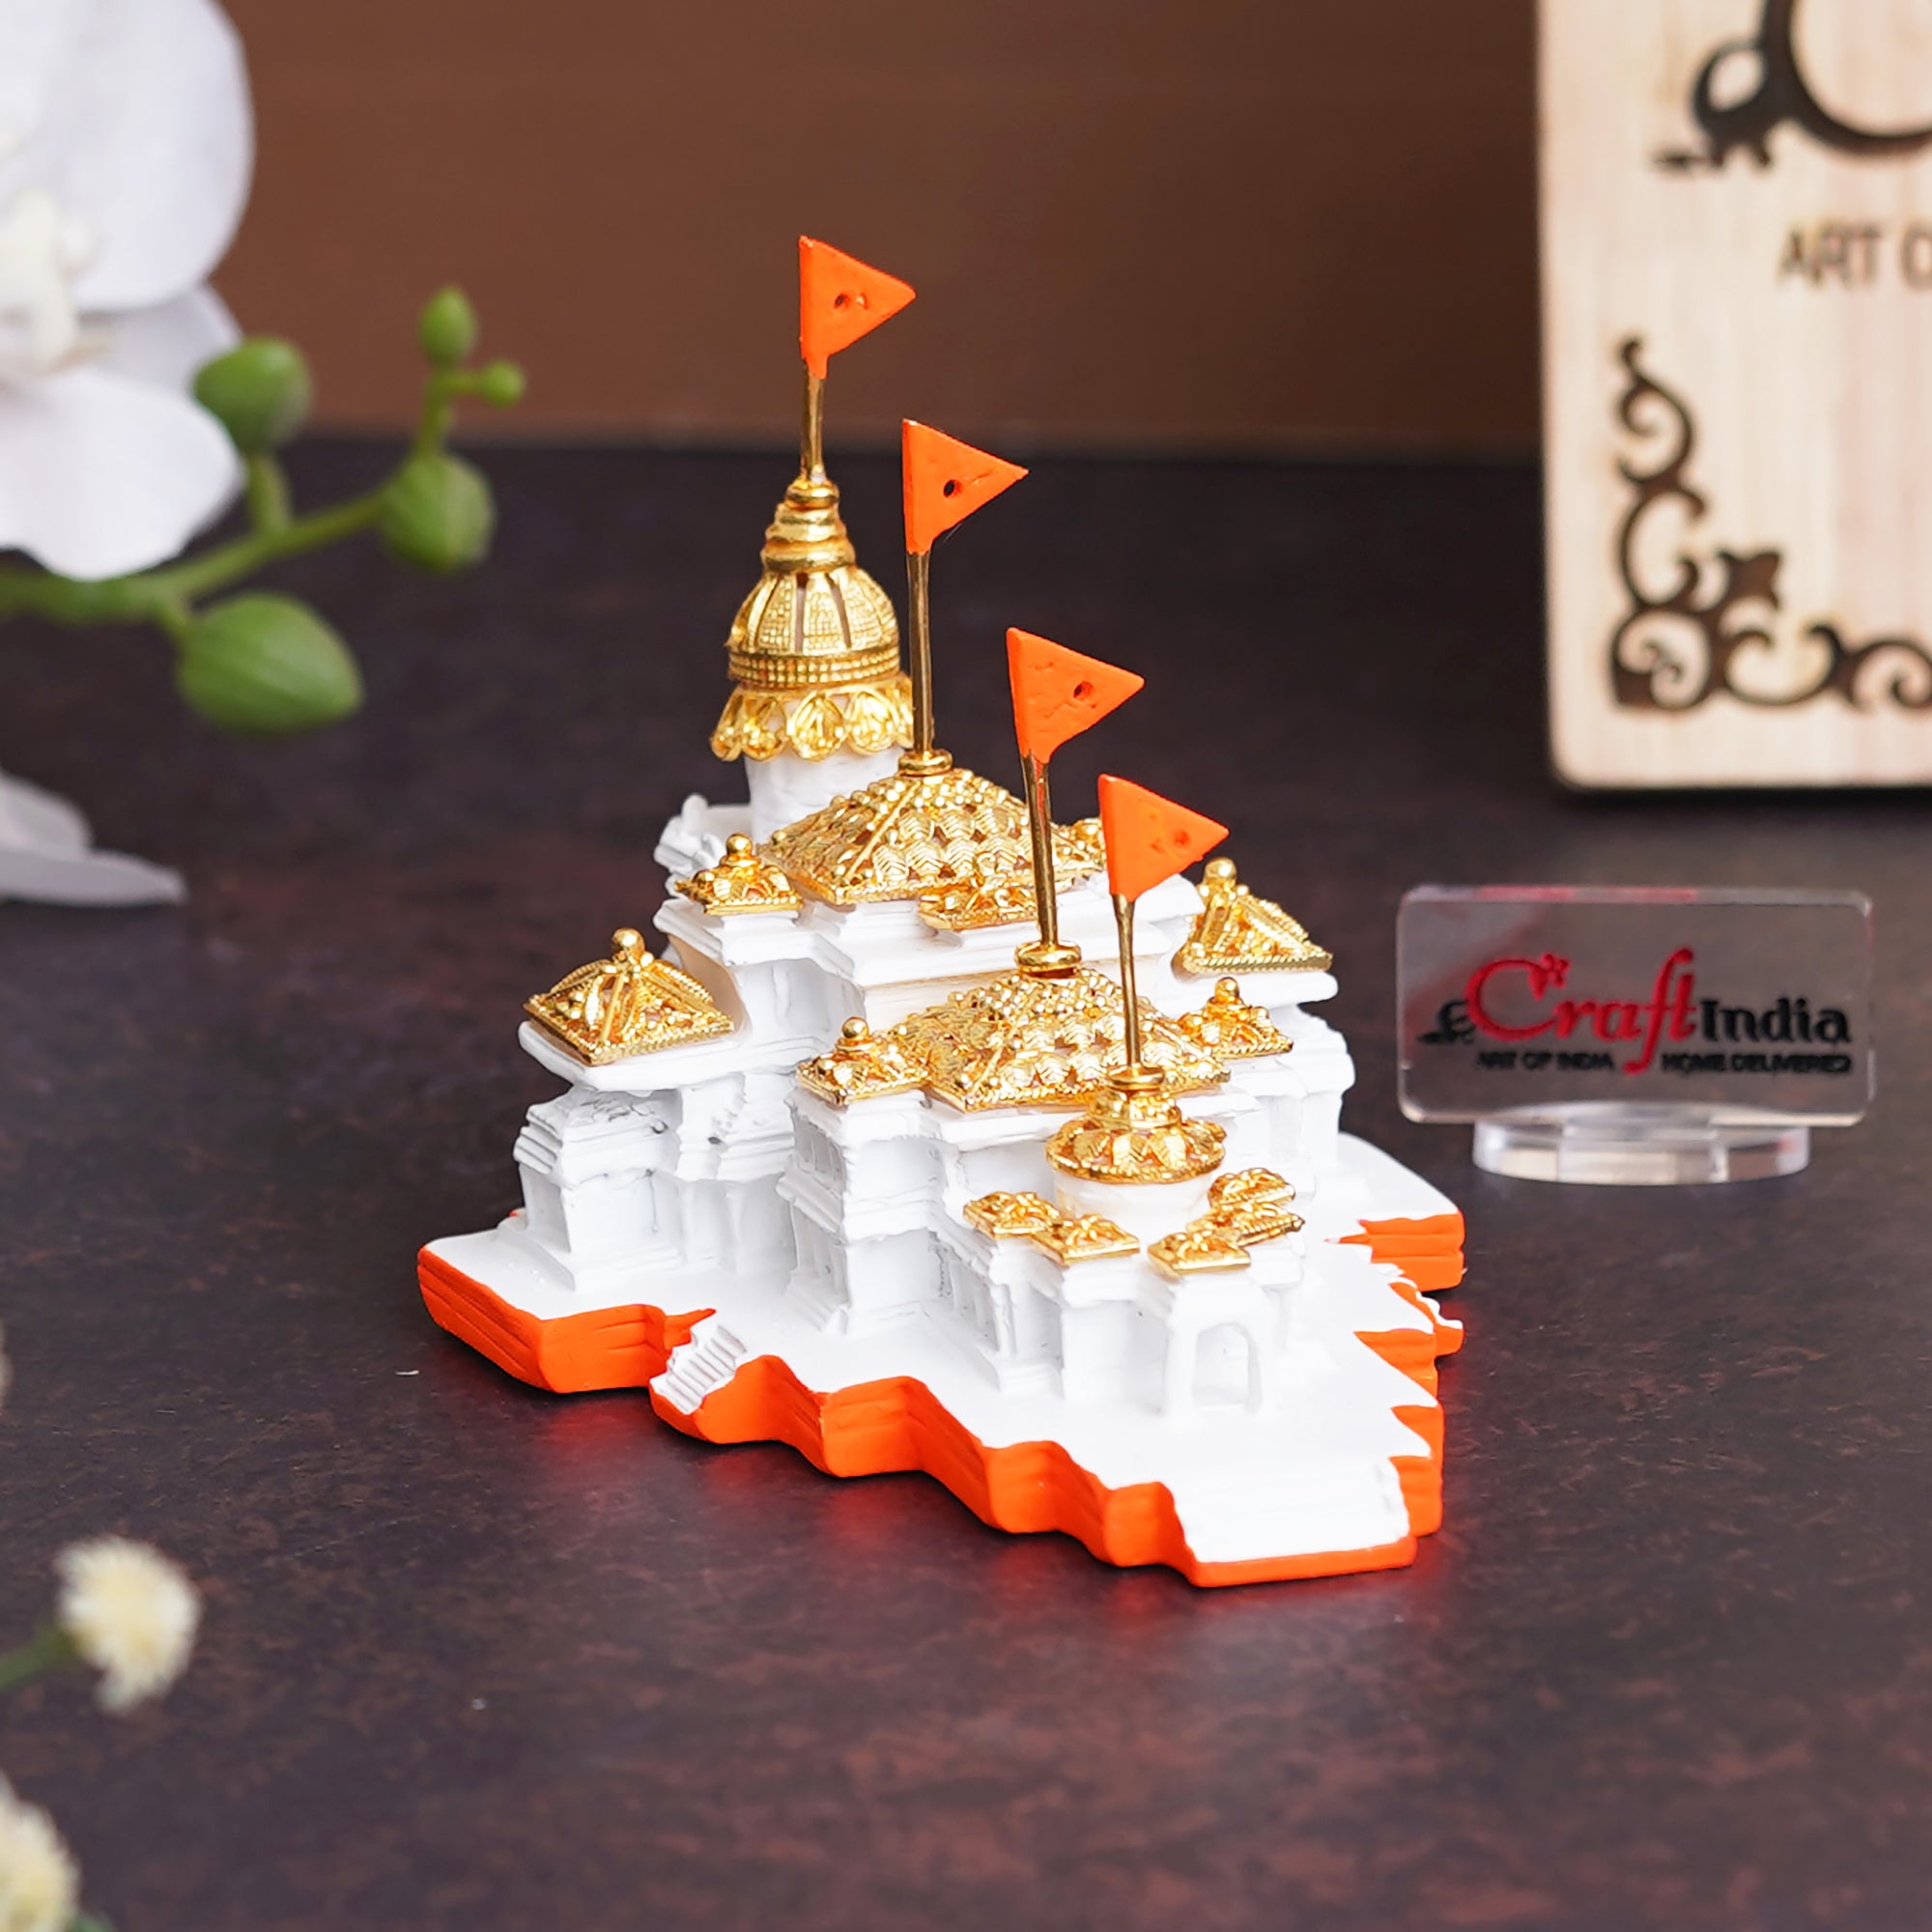 eCraftIndia Shri Ram Mandir Ayodhya Model Authentic Design - Perfect for Home Temple, Decor, and Spiritual Gifting (White, Gold, Orange) 1